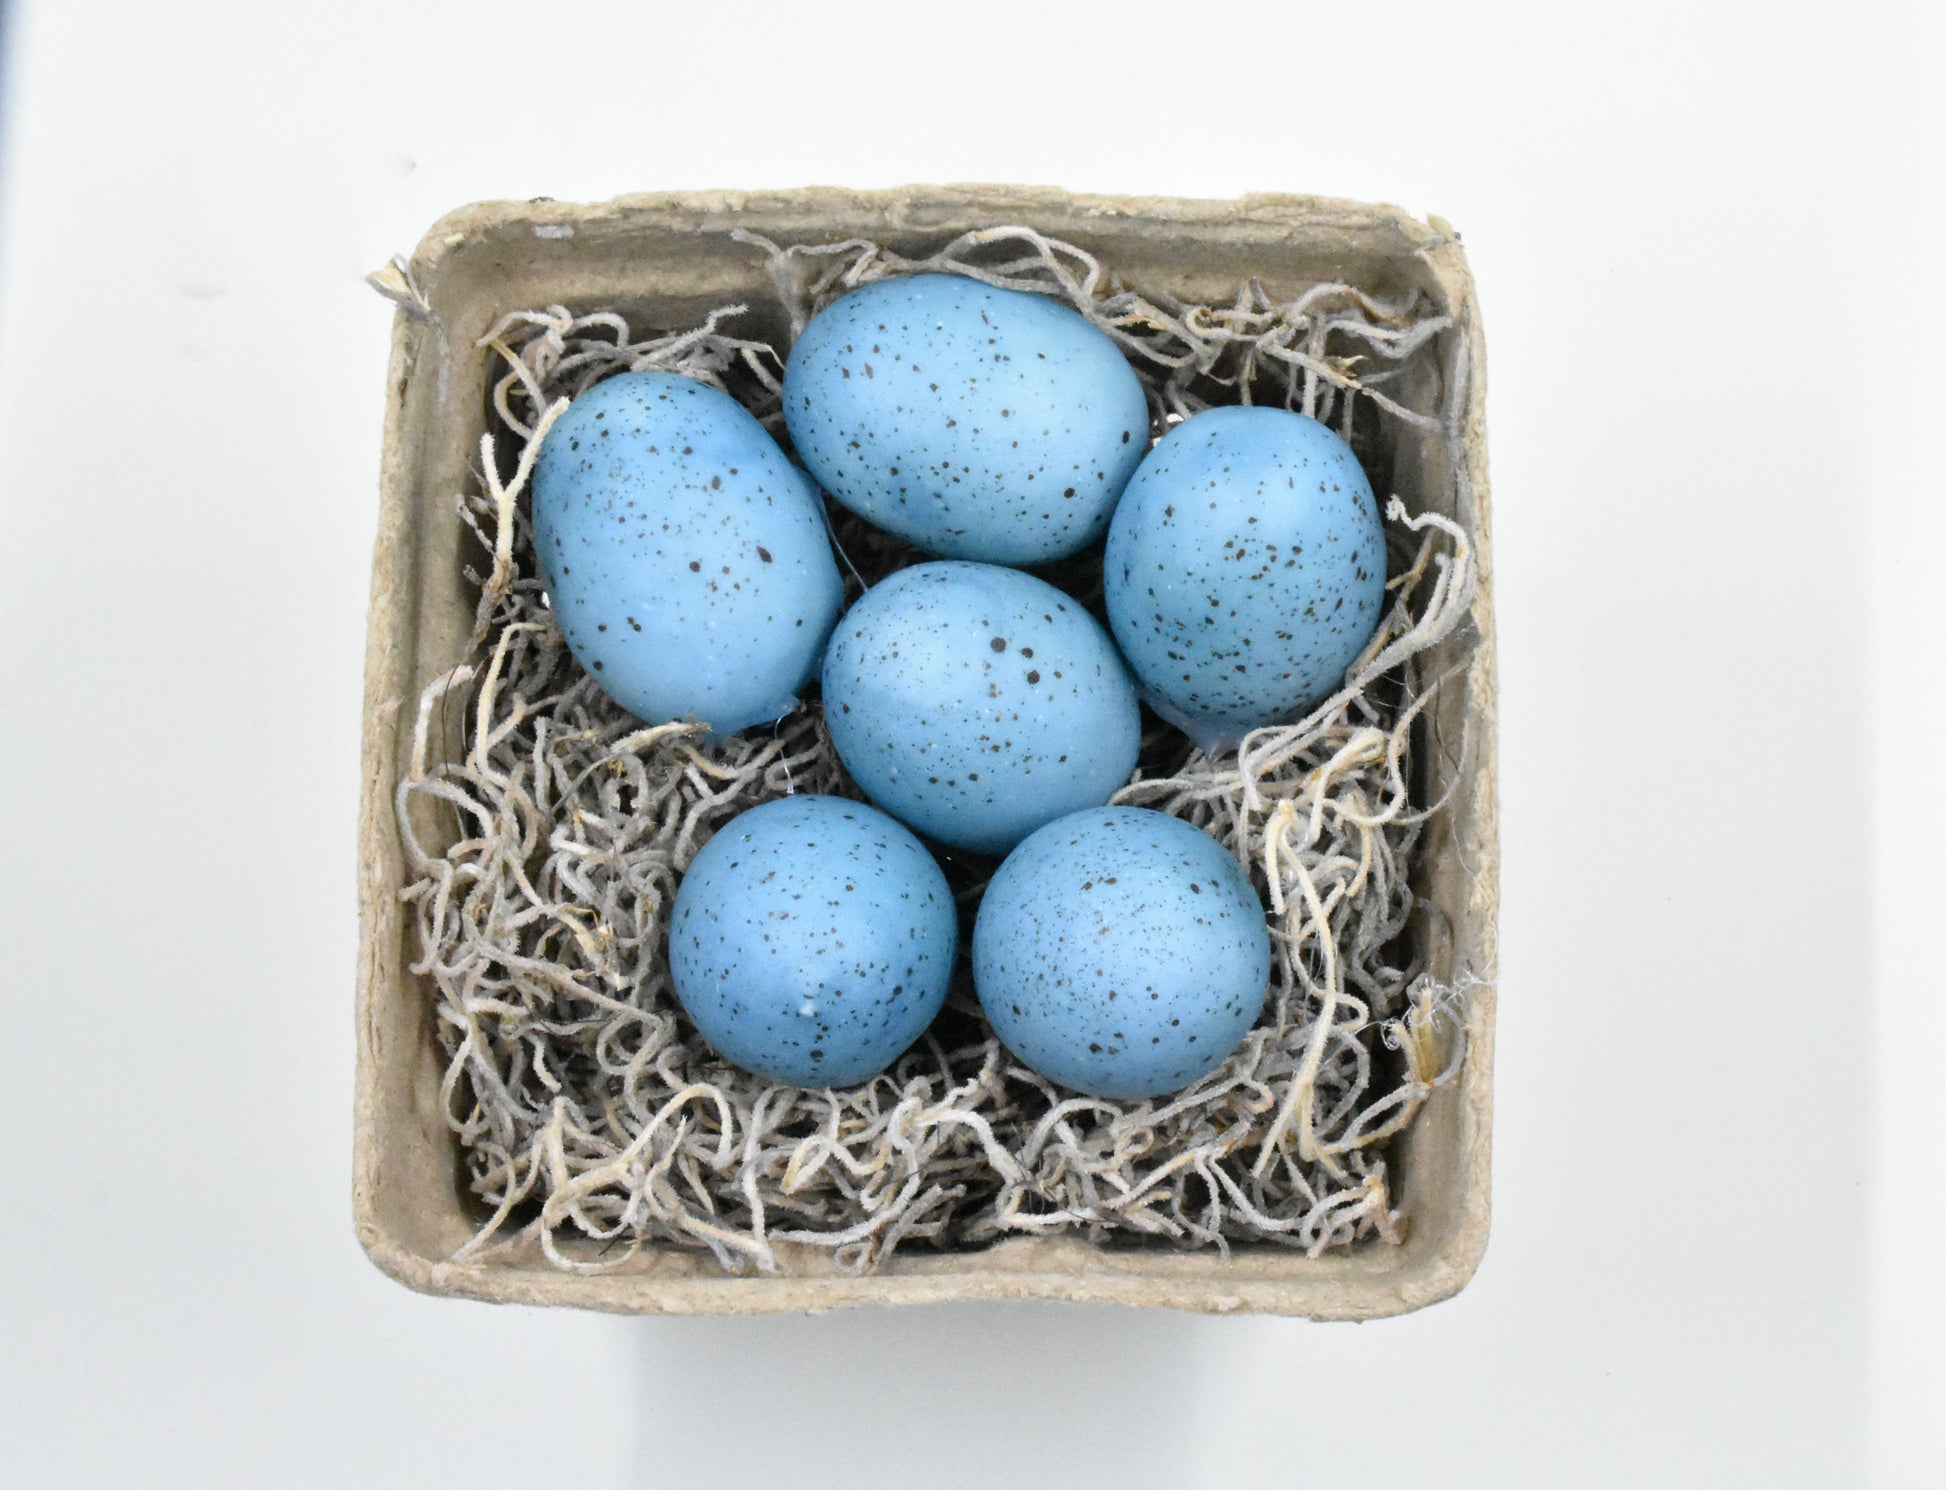 Egg Basket Sassafras Originals